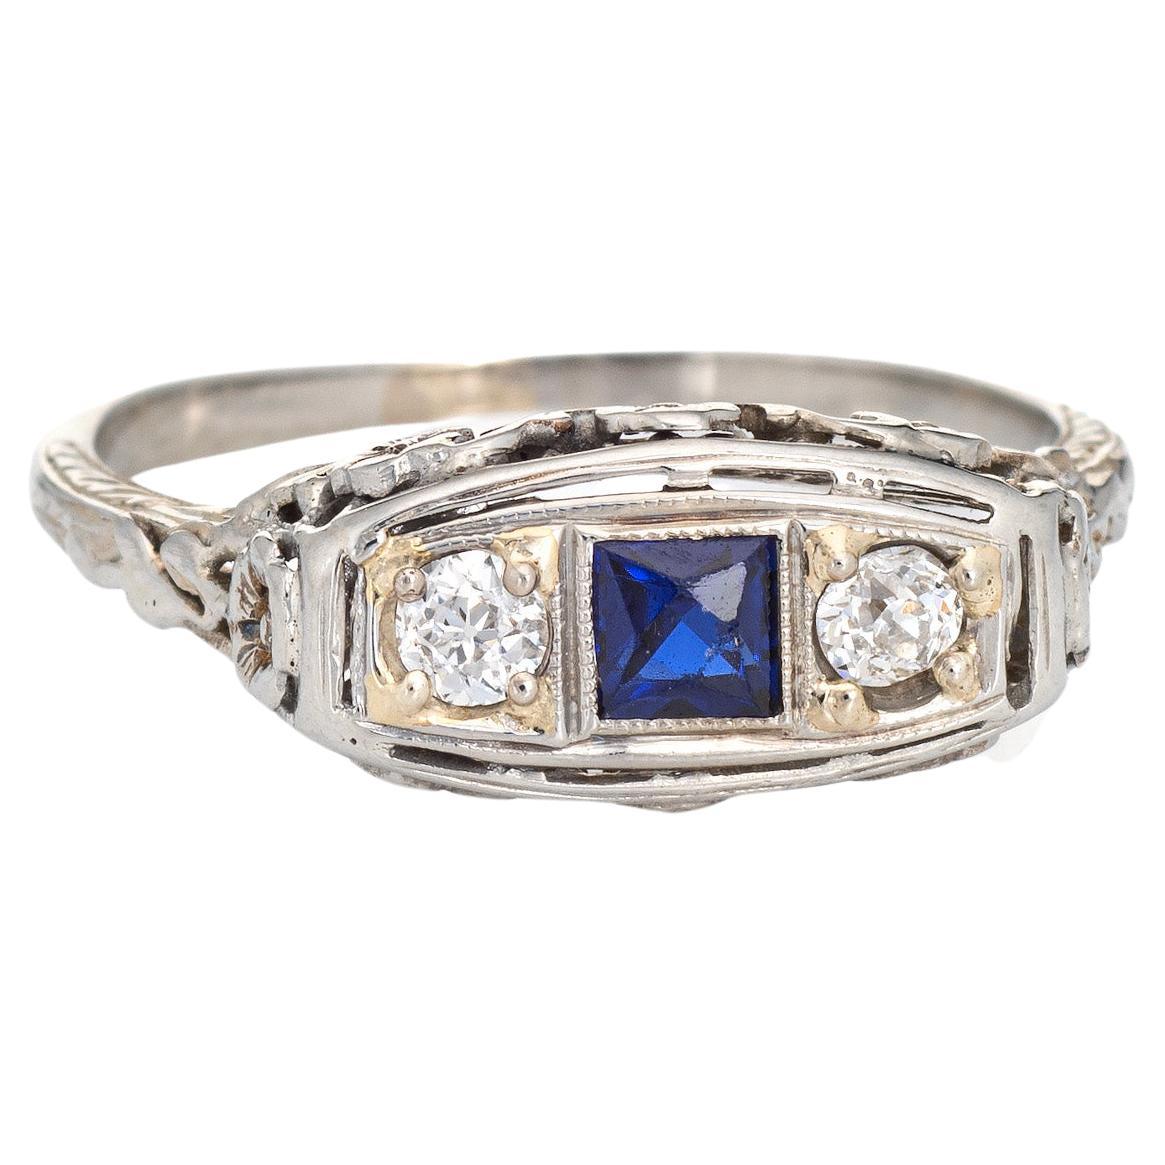 Vintage Art Deco Diamond Ring 18k White Gold French Cut Sapphire Fine Jewelry